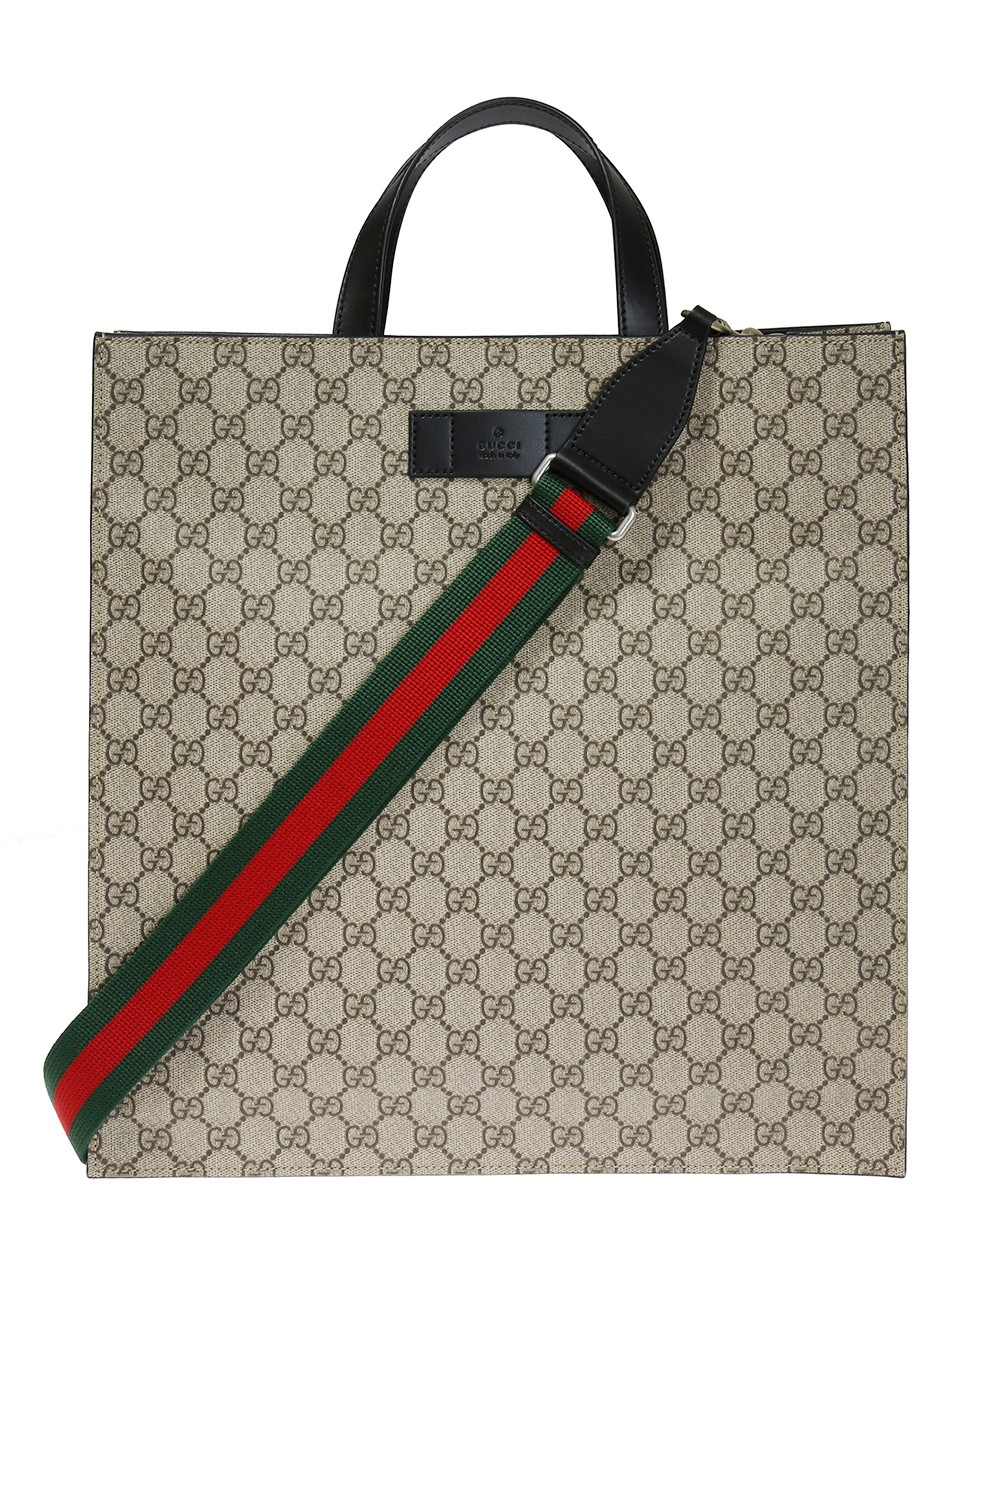 Gucci Men's Bags, Shop for Gucci Men's Bags